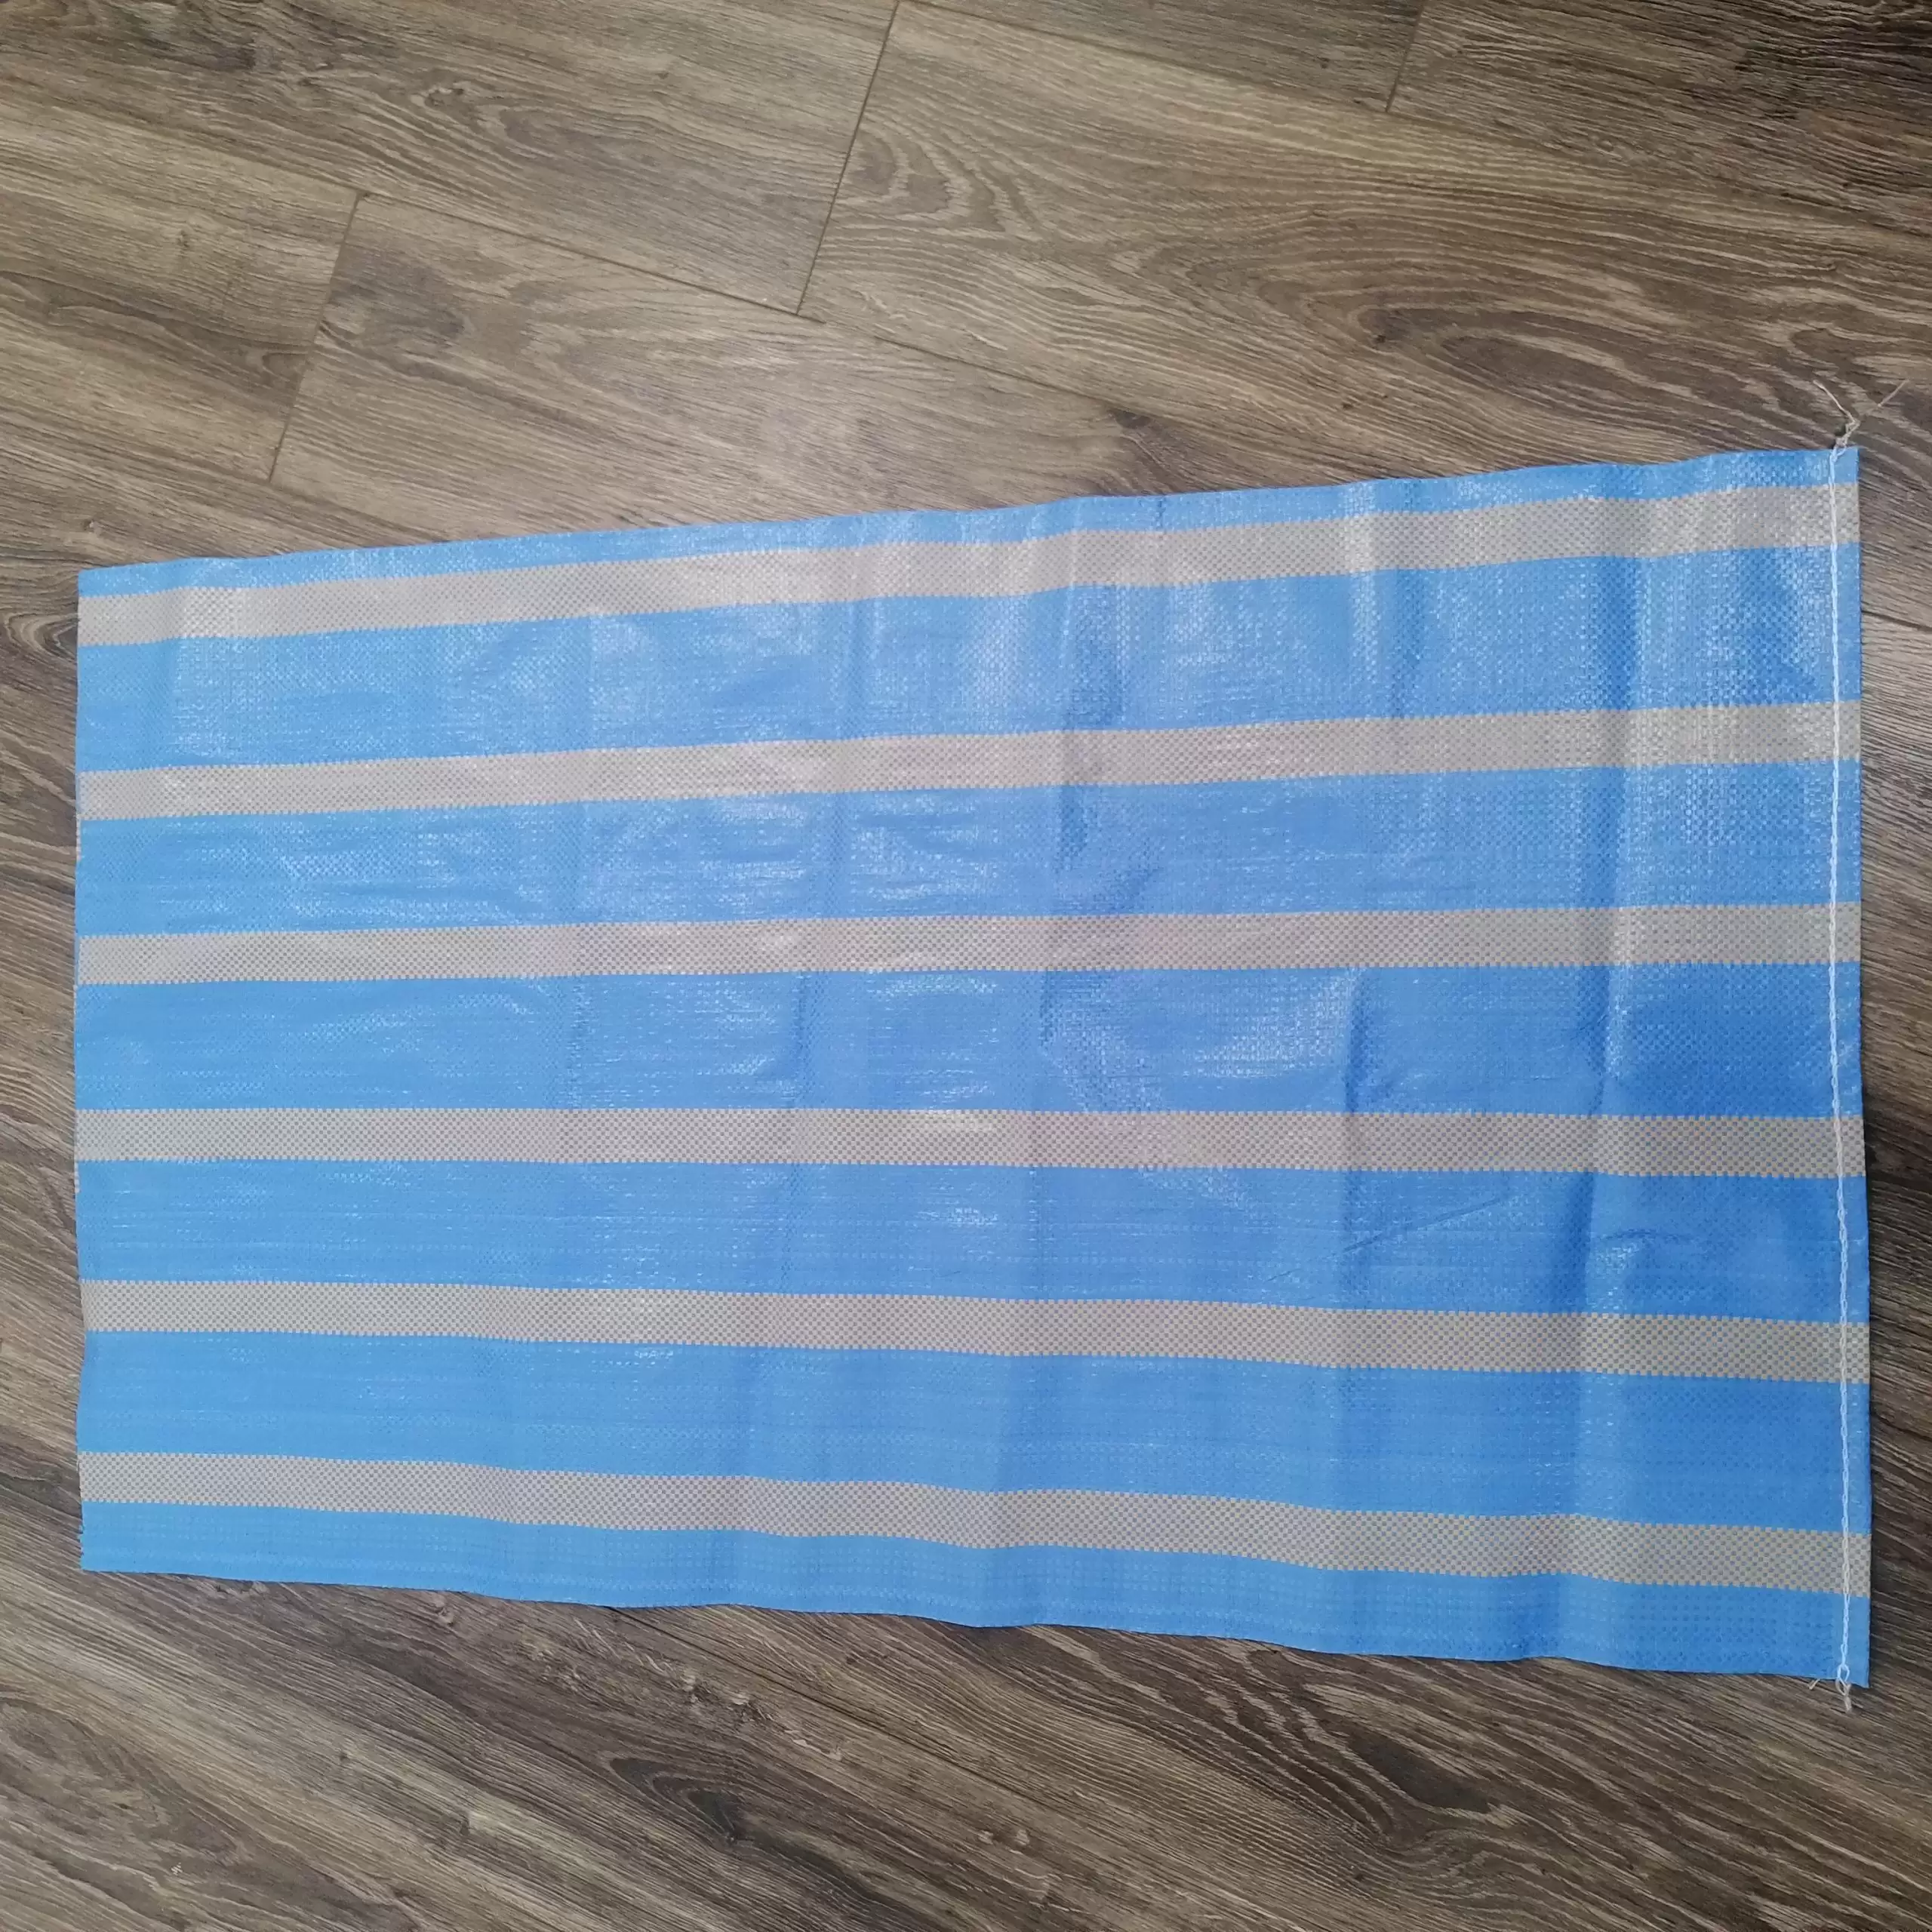 Woven bag with blue-orange stripes 